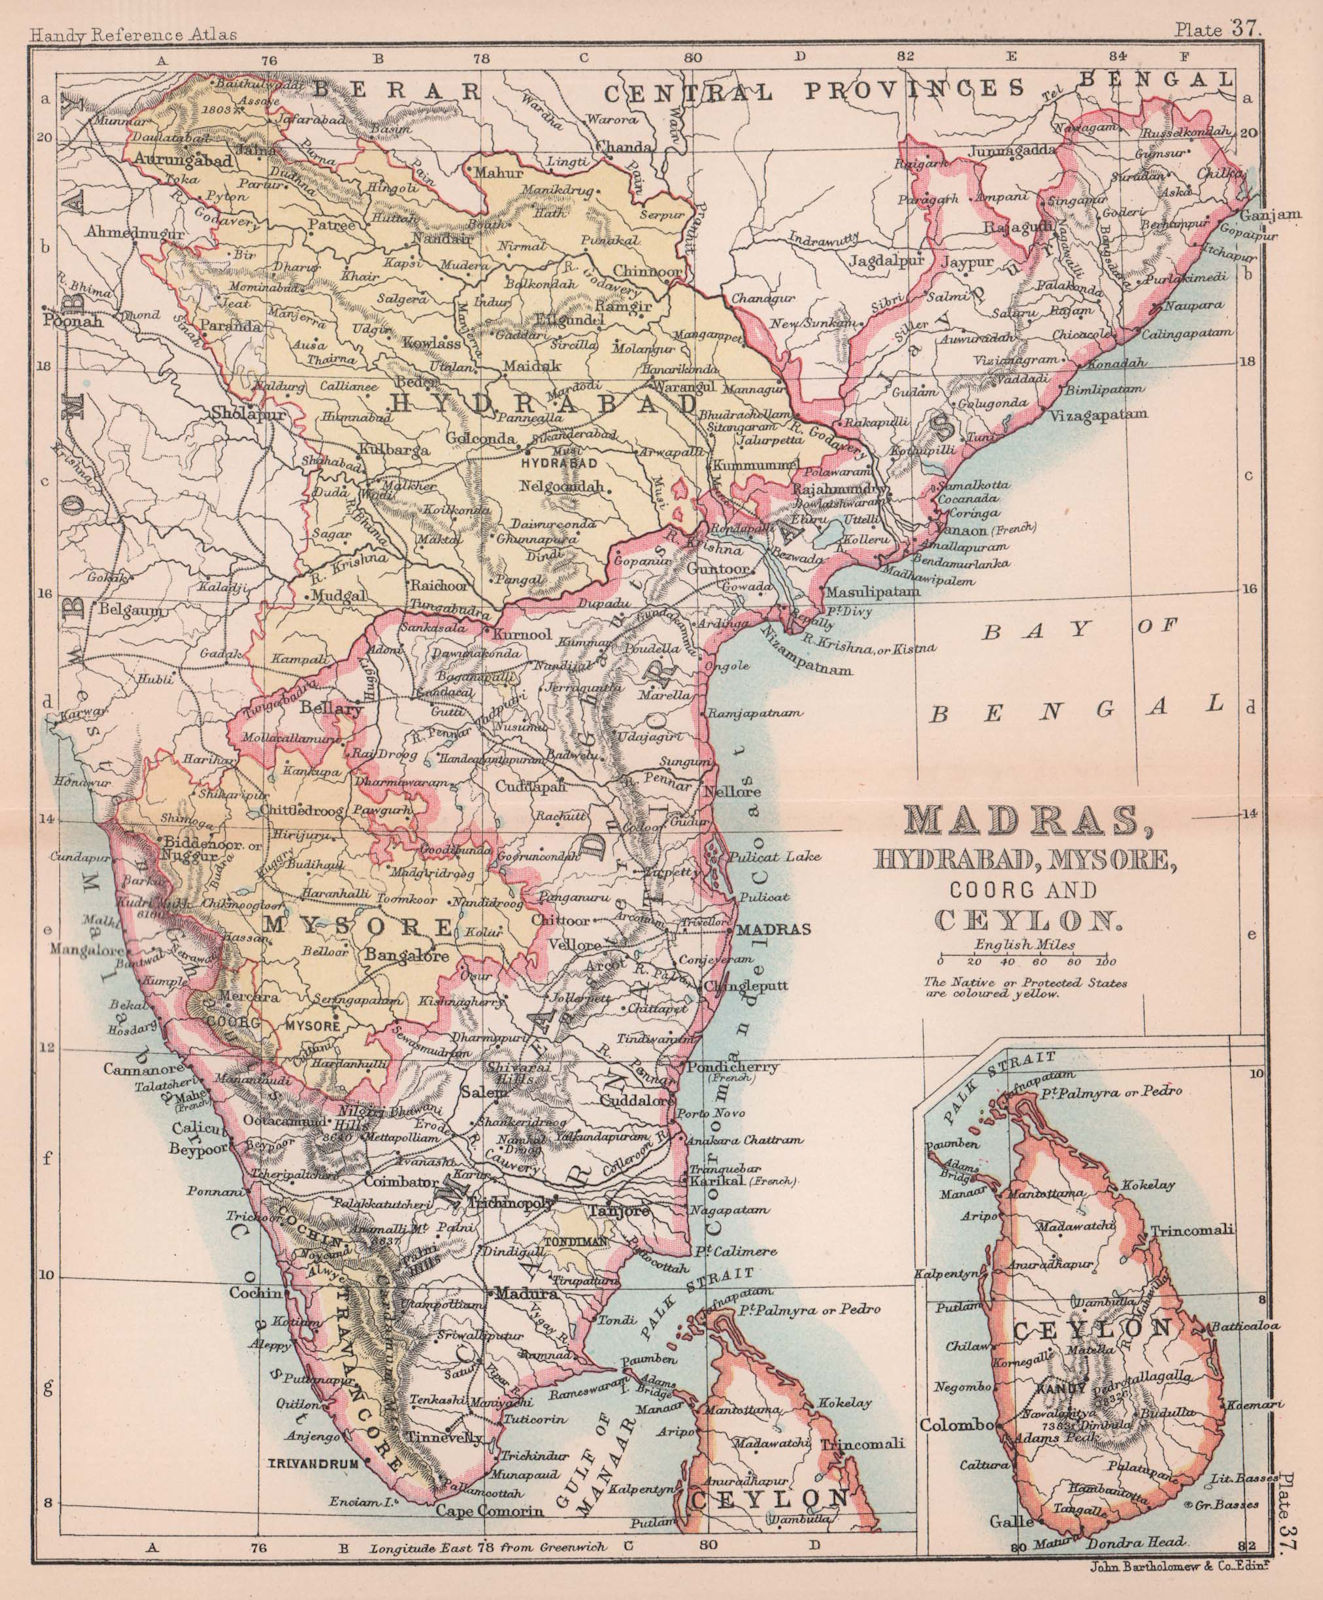 British India South. Madras Hydrabad Mysore Coorg Ceylon. BARTHOLOMEW 1893 map